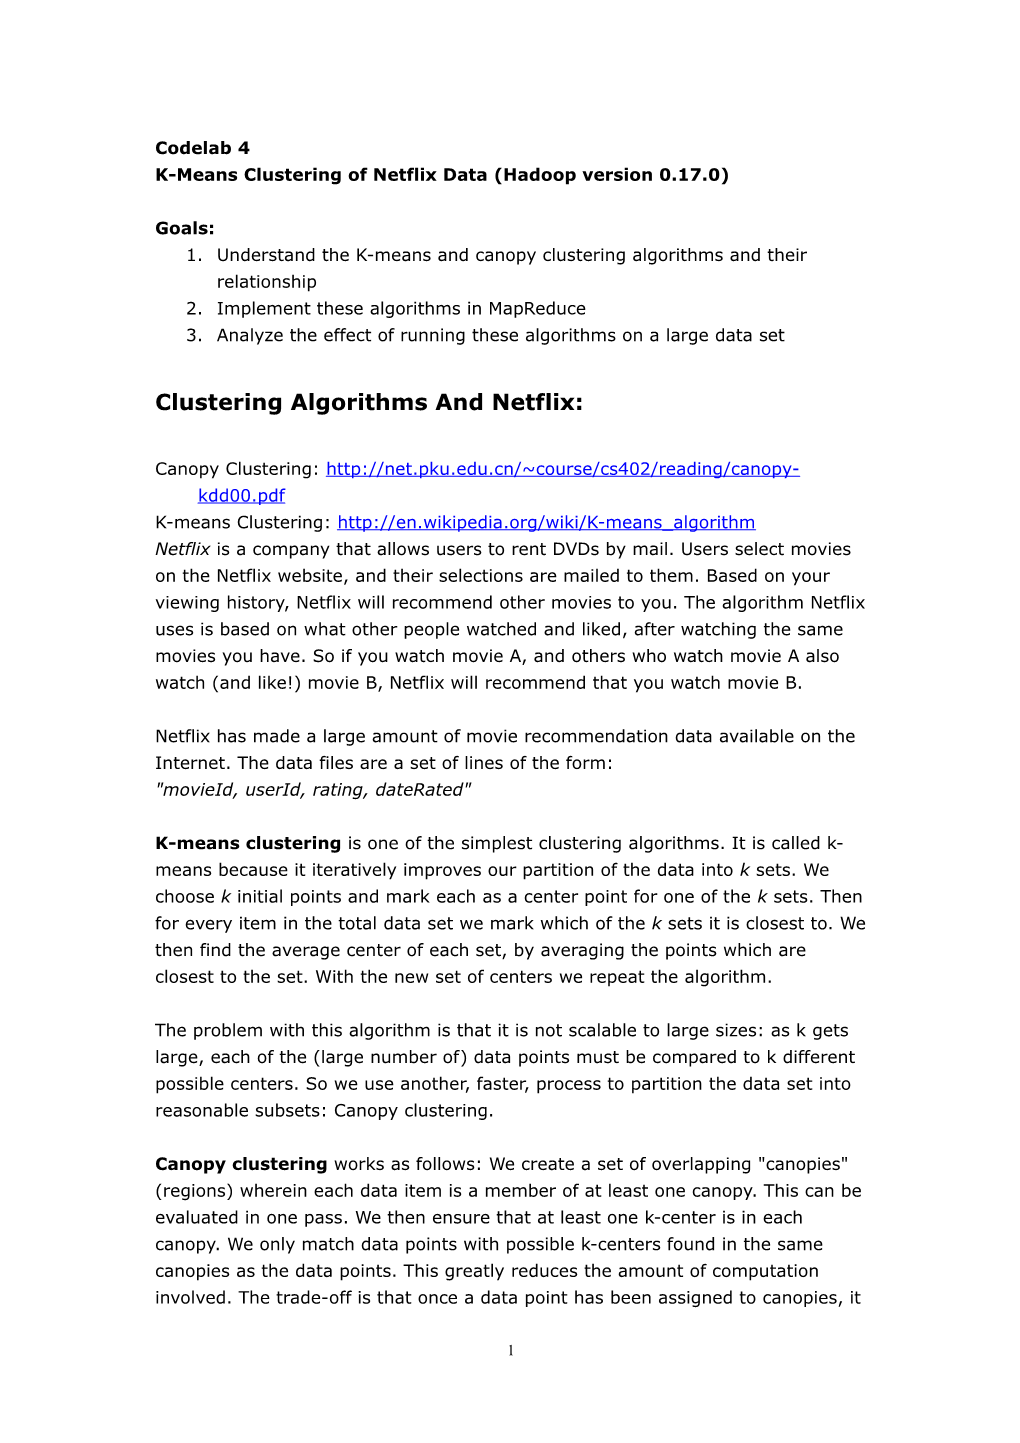 K-Means Clustering of Netflix Data (Hadoop Version 0.17.0)